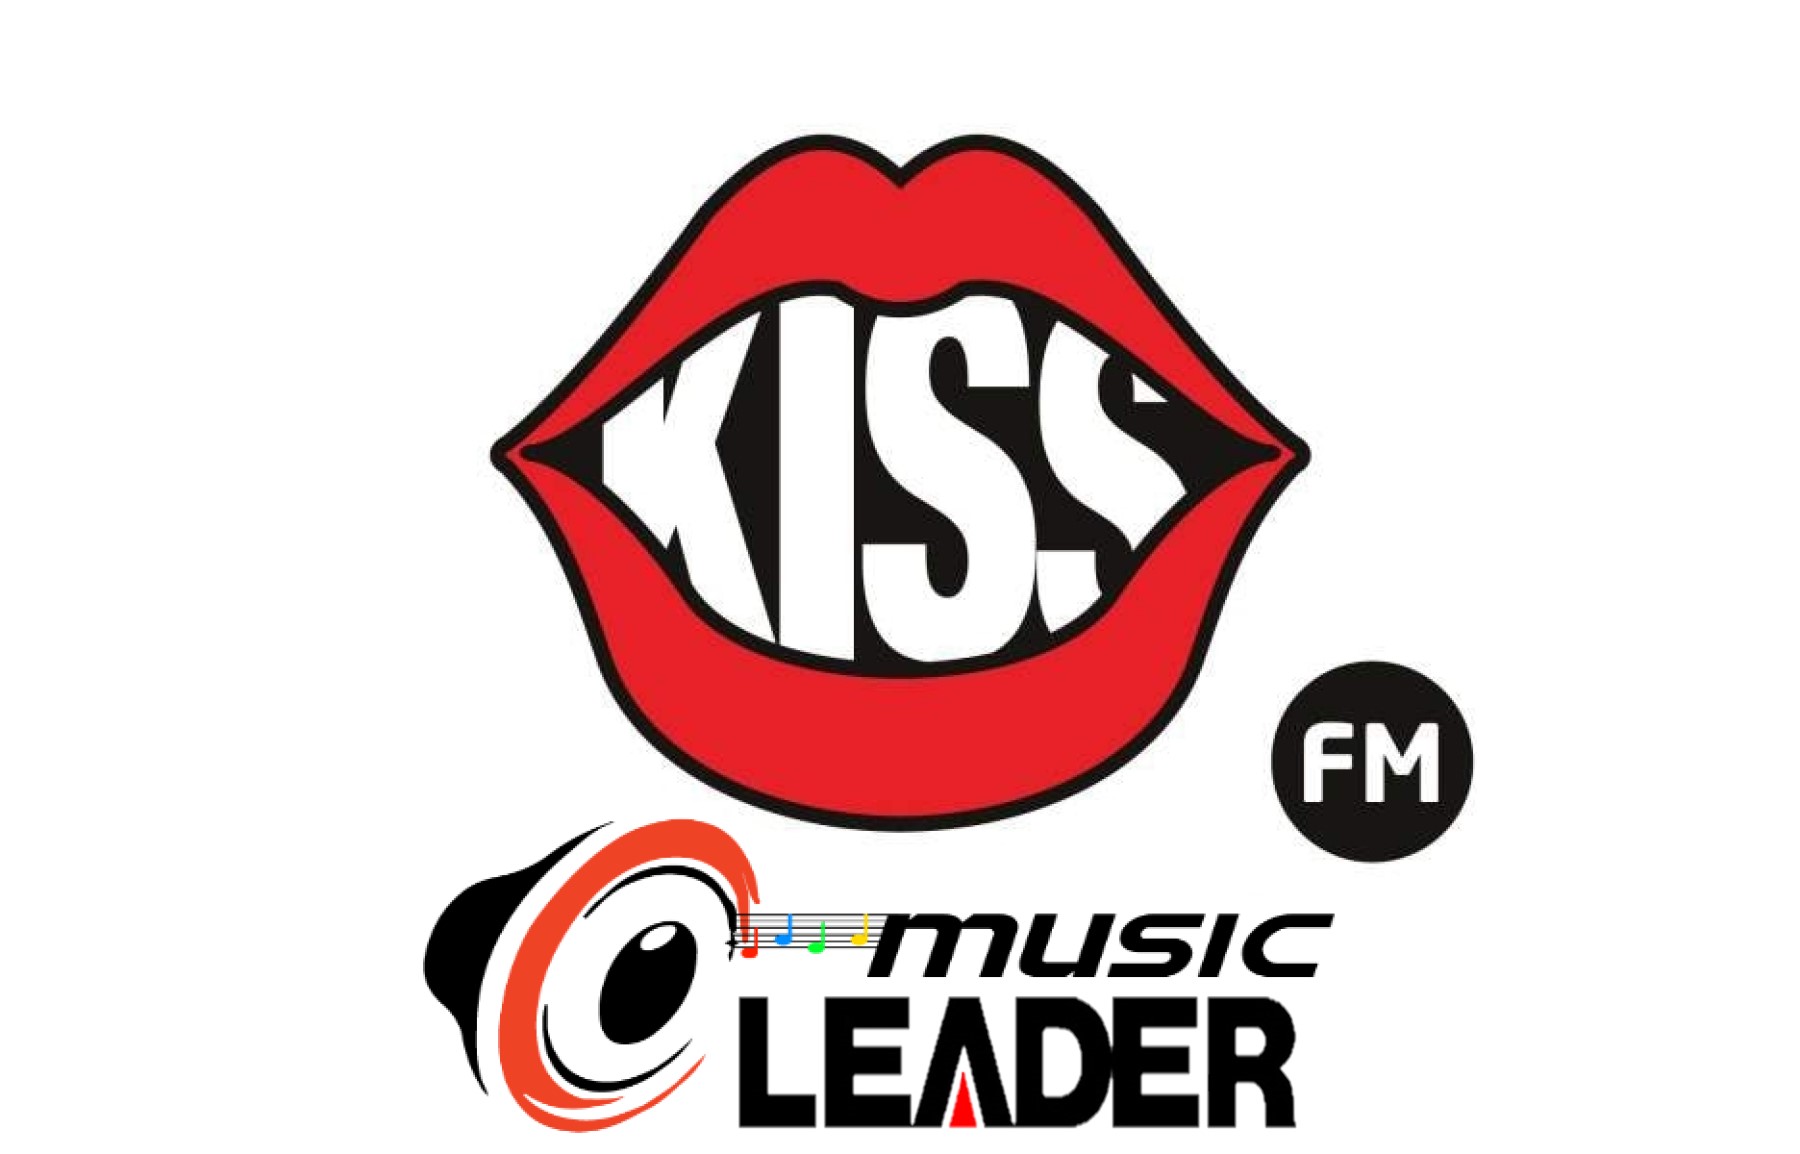 KISS FM THE MUSIC LEADER.jpg